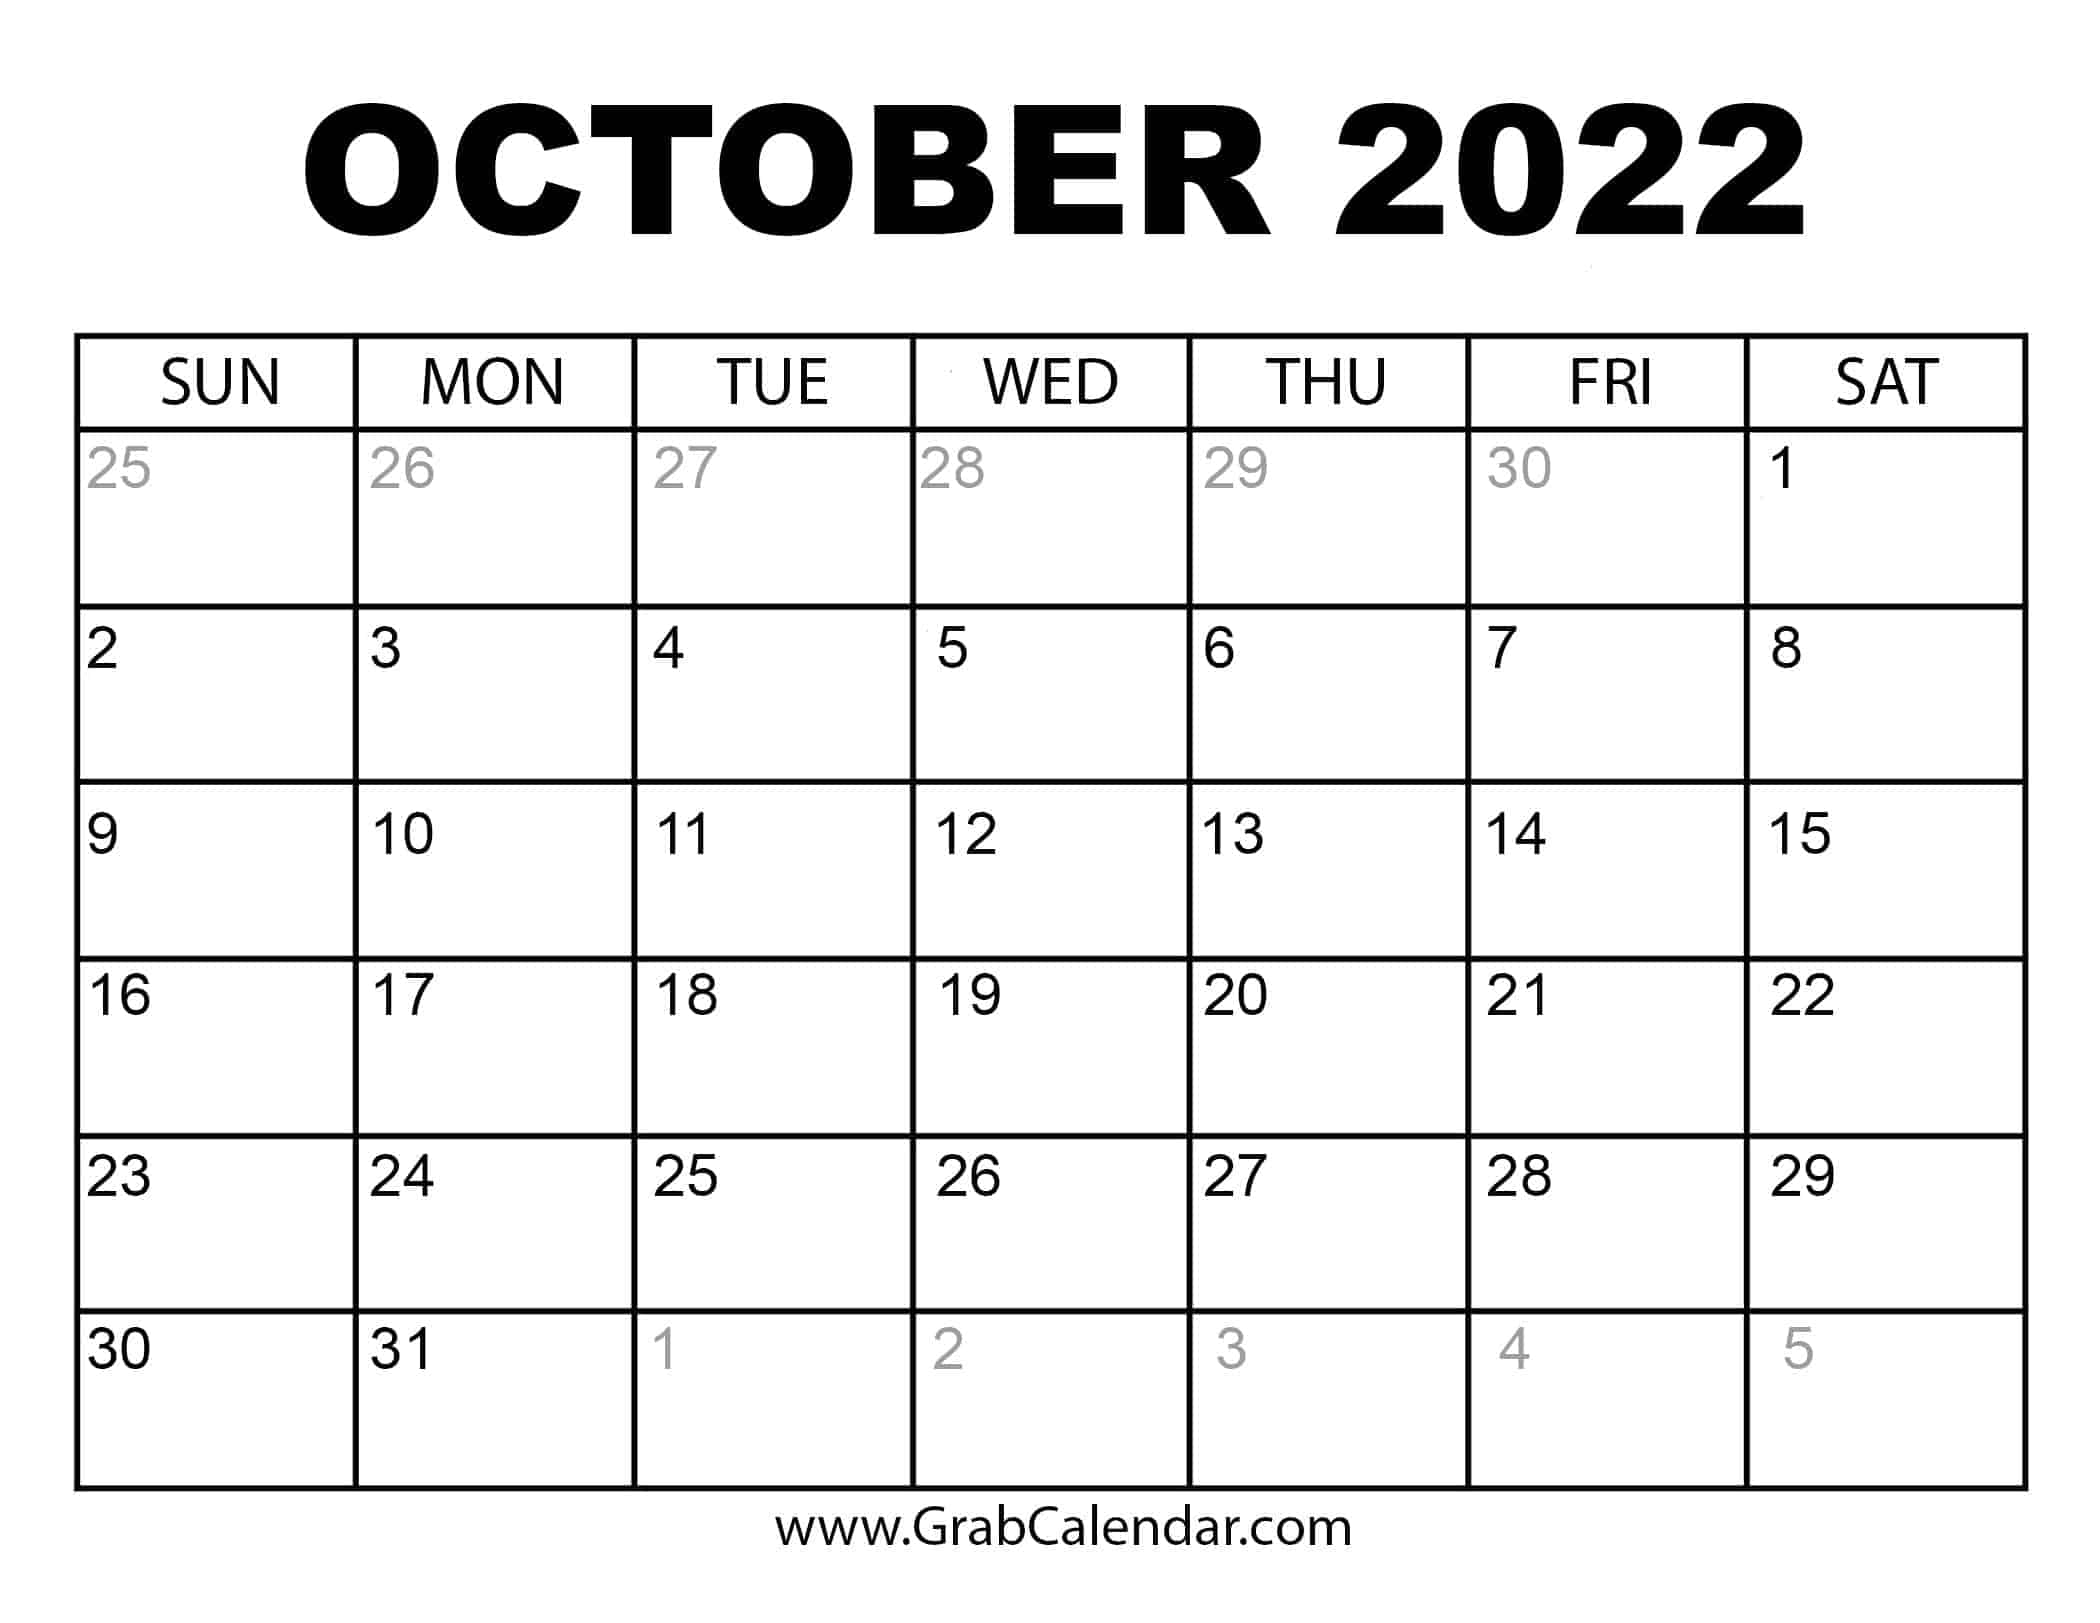 October 2022 Calendar Images Printable October 2022 Calendar